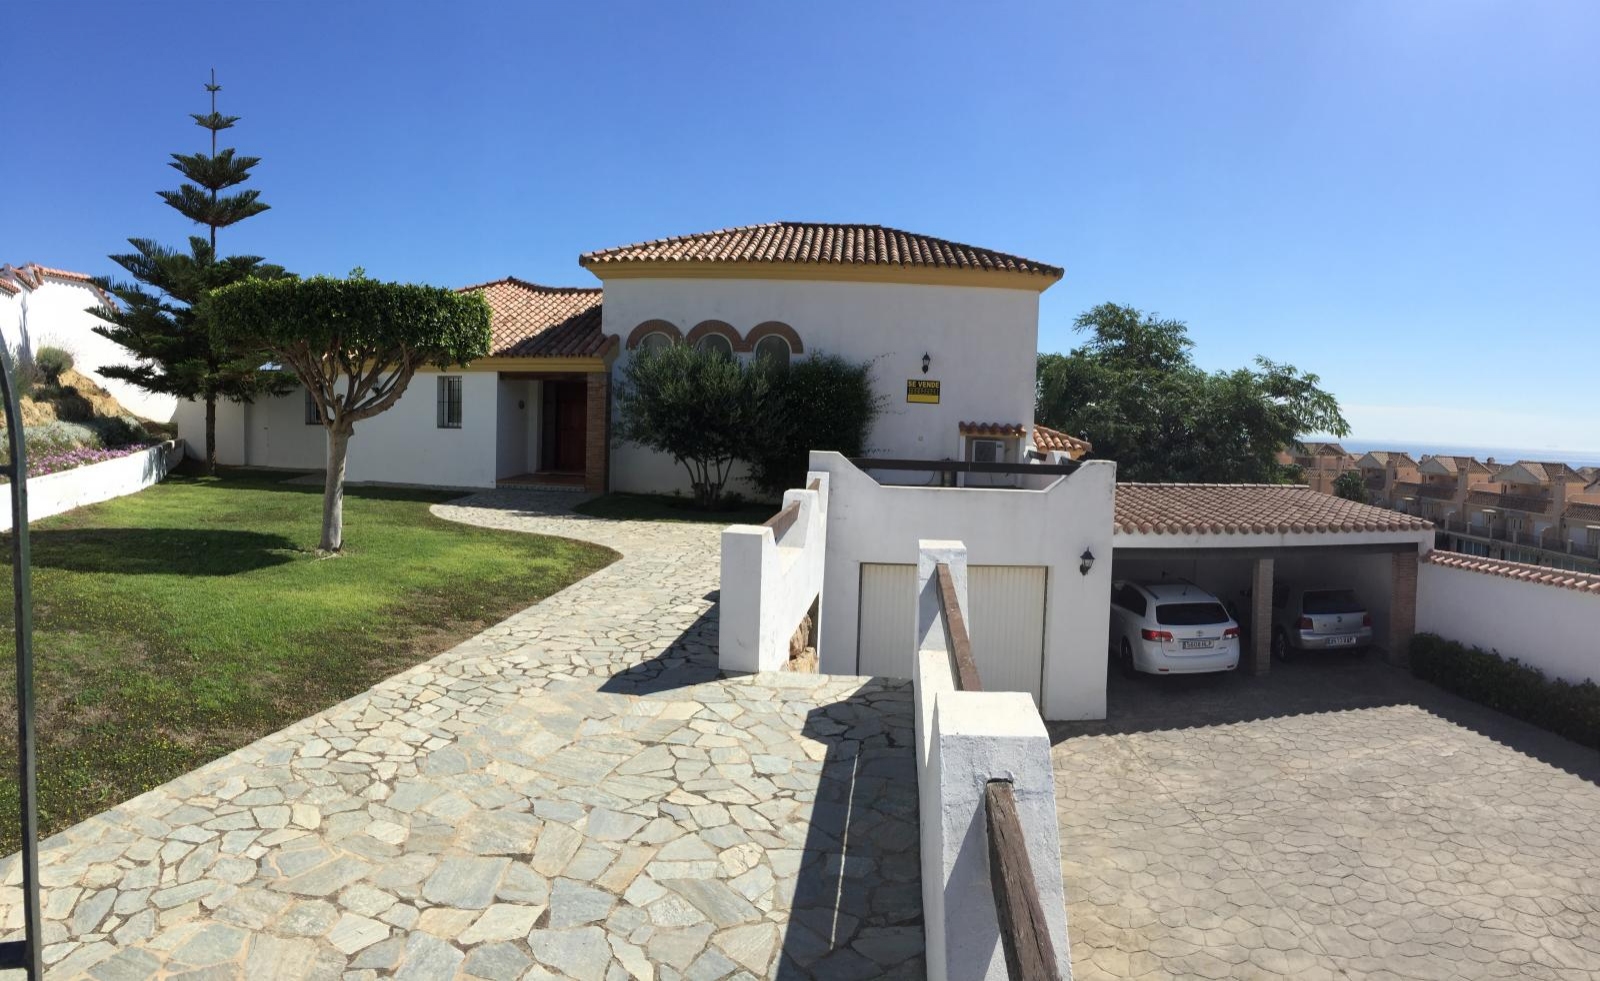 Villa zum verkauf in La Alcaidesa